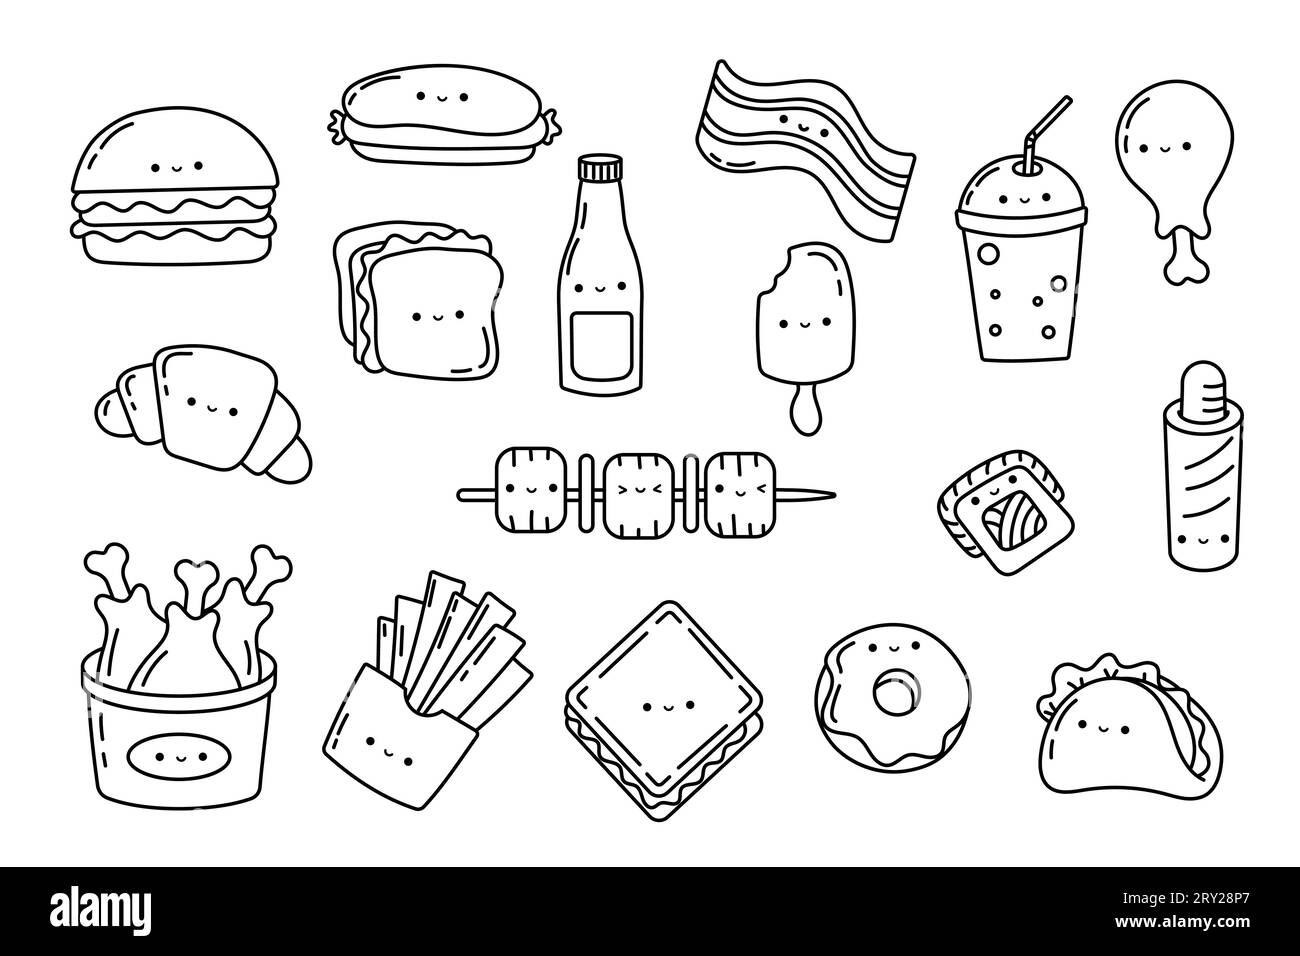 Vecteur Stock Cute kawaii junk food drawing illustration